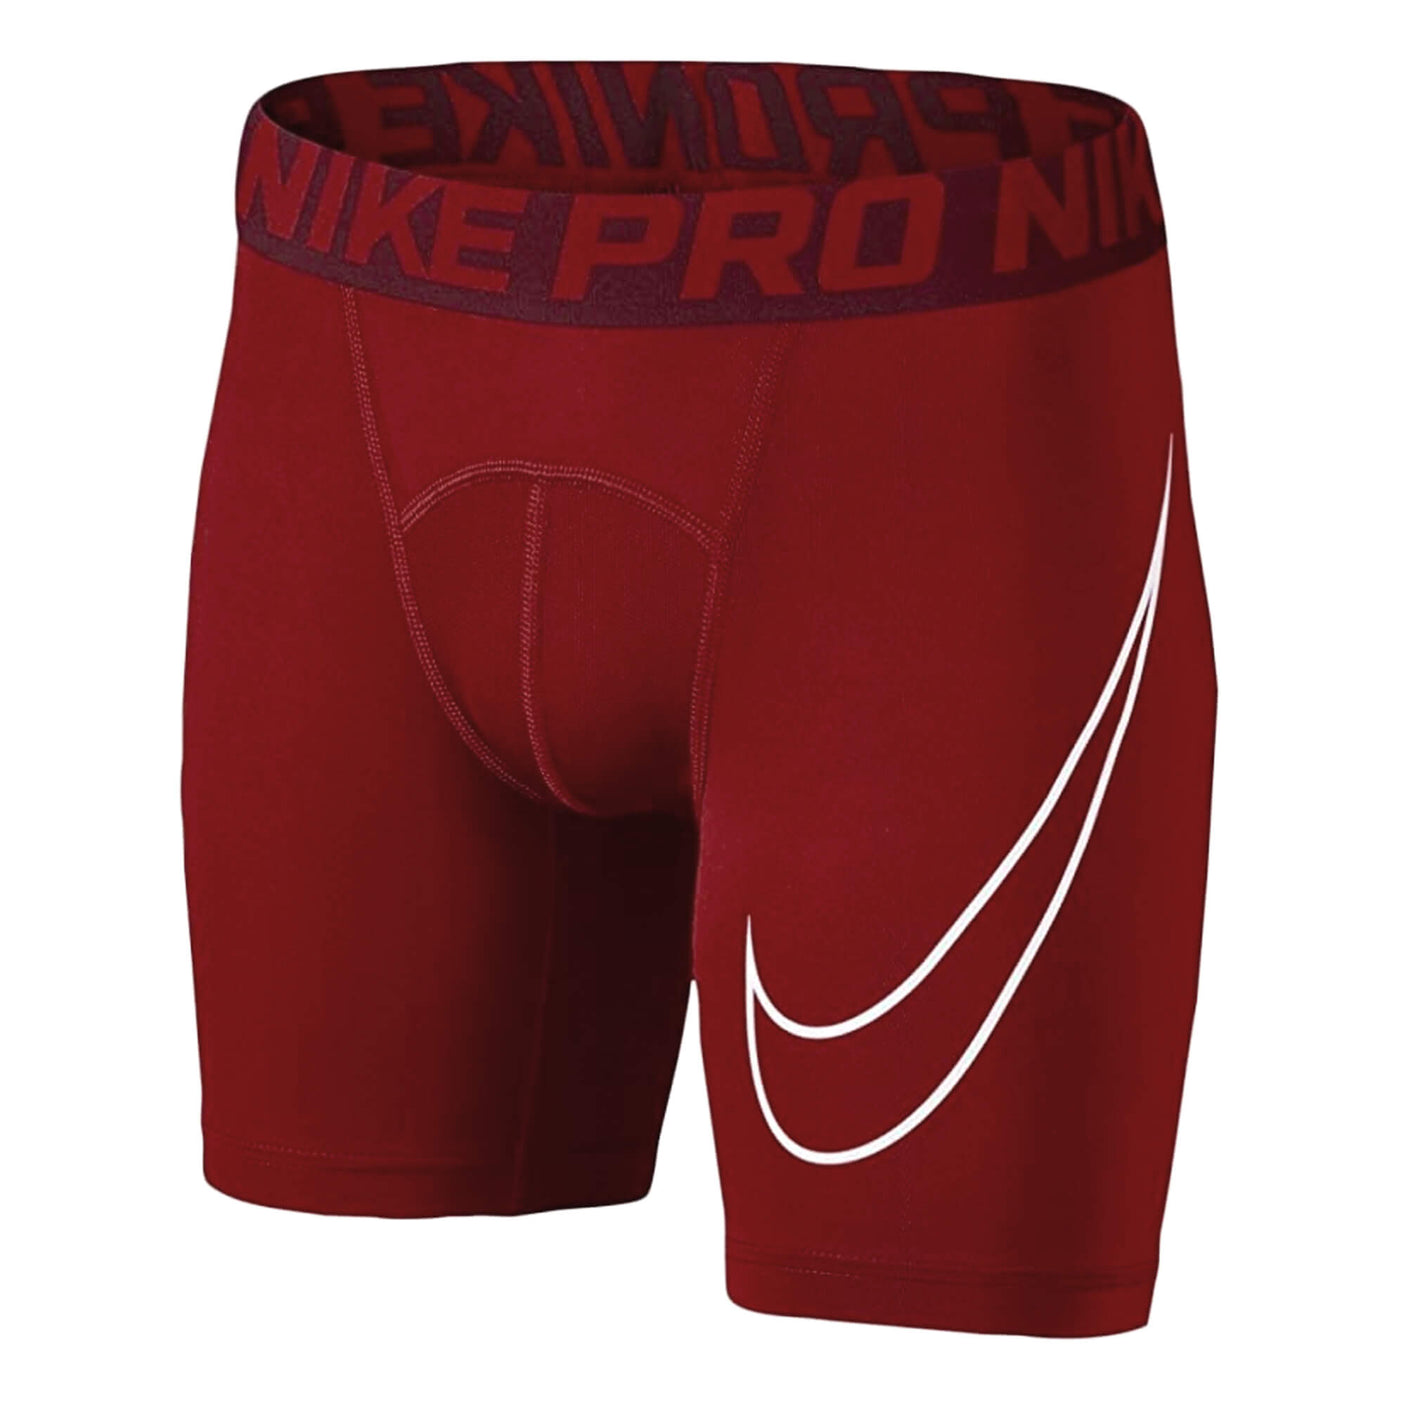 Nike Kids Pro Compression Shorts Red/White - M